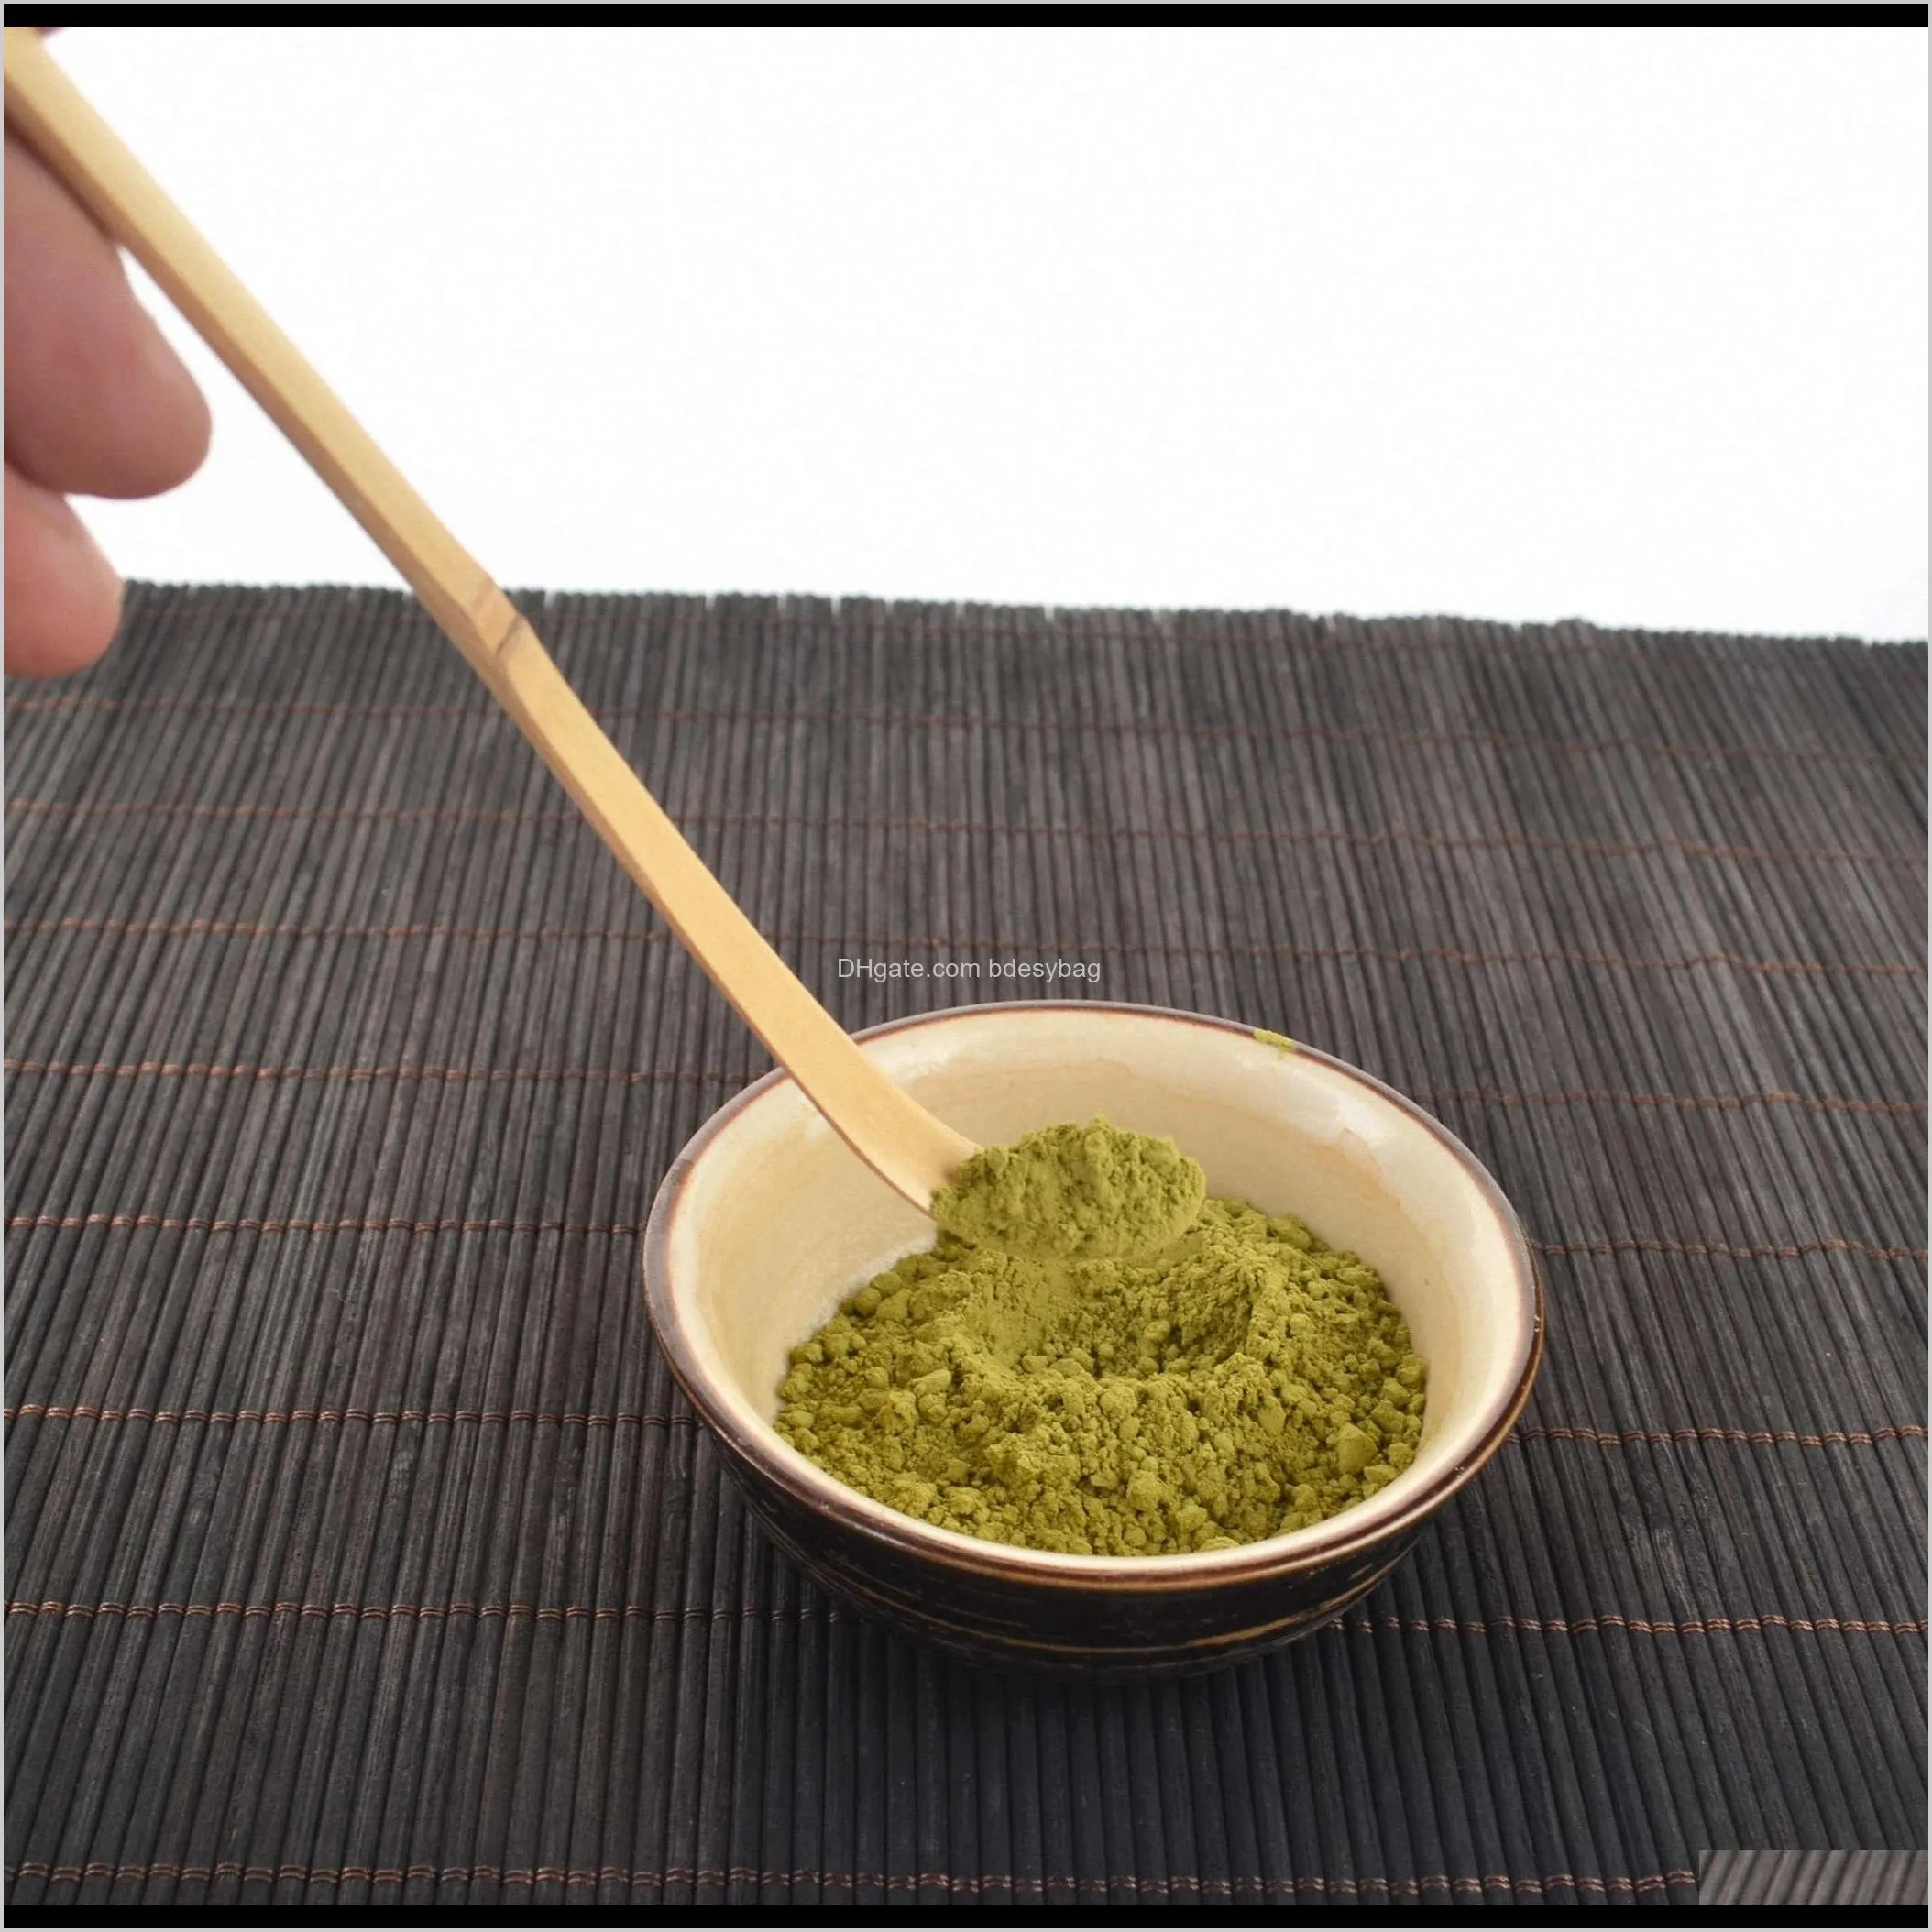 1x natural bamboo chashaku matcha bamboo tea spoon ceremony tool accessory 18cm tea scoops